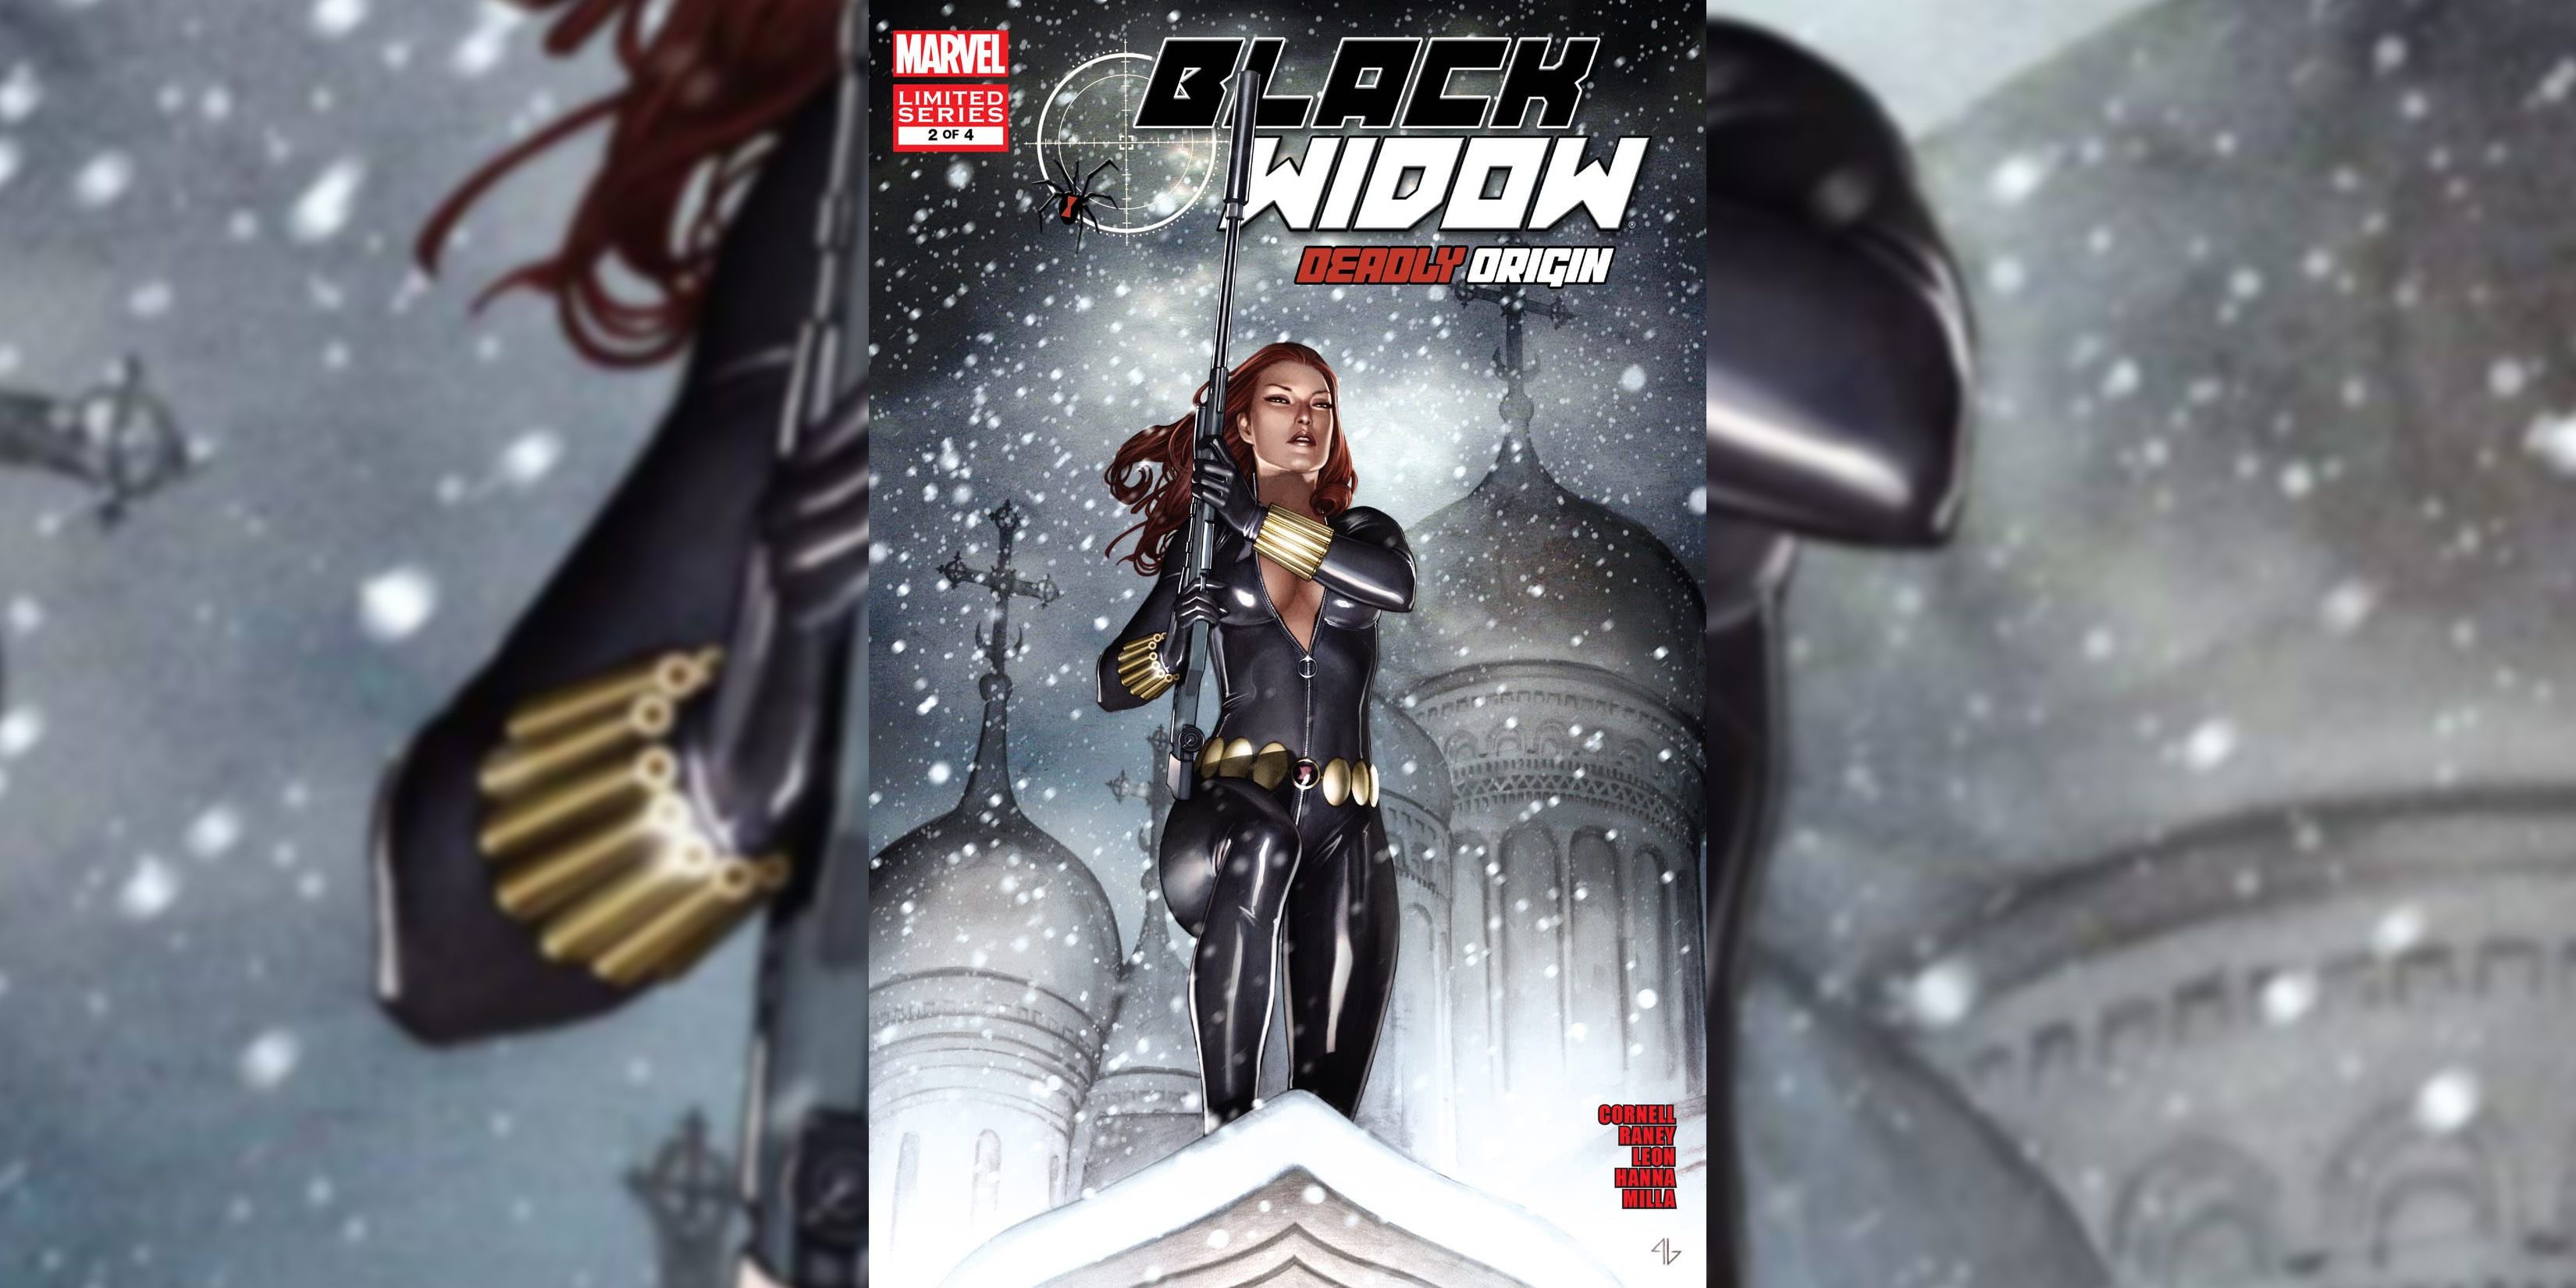 Black Widow's Deadly Origin storyline